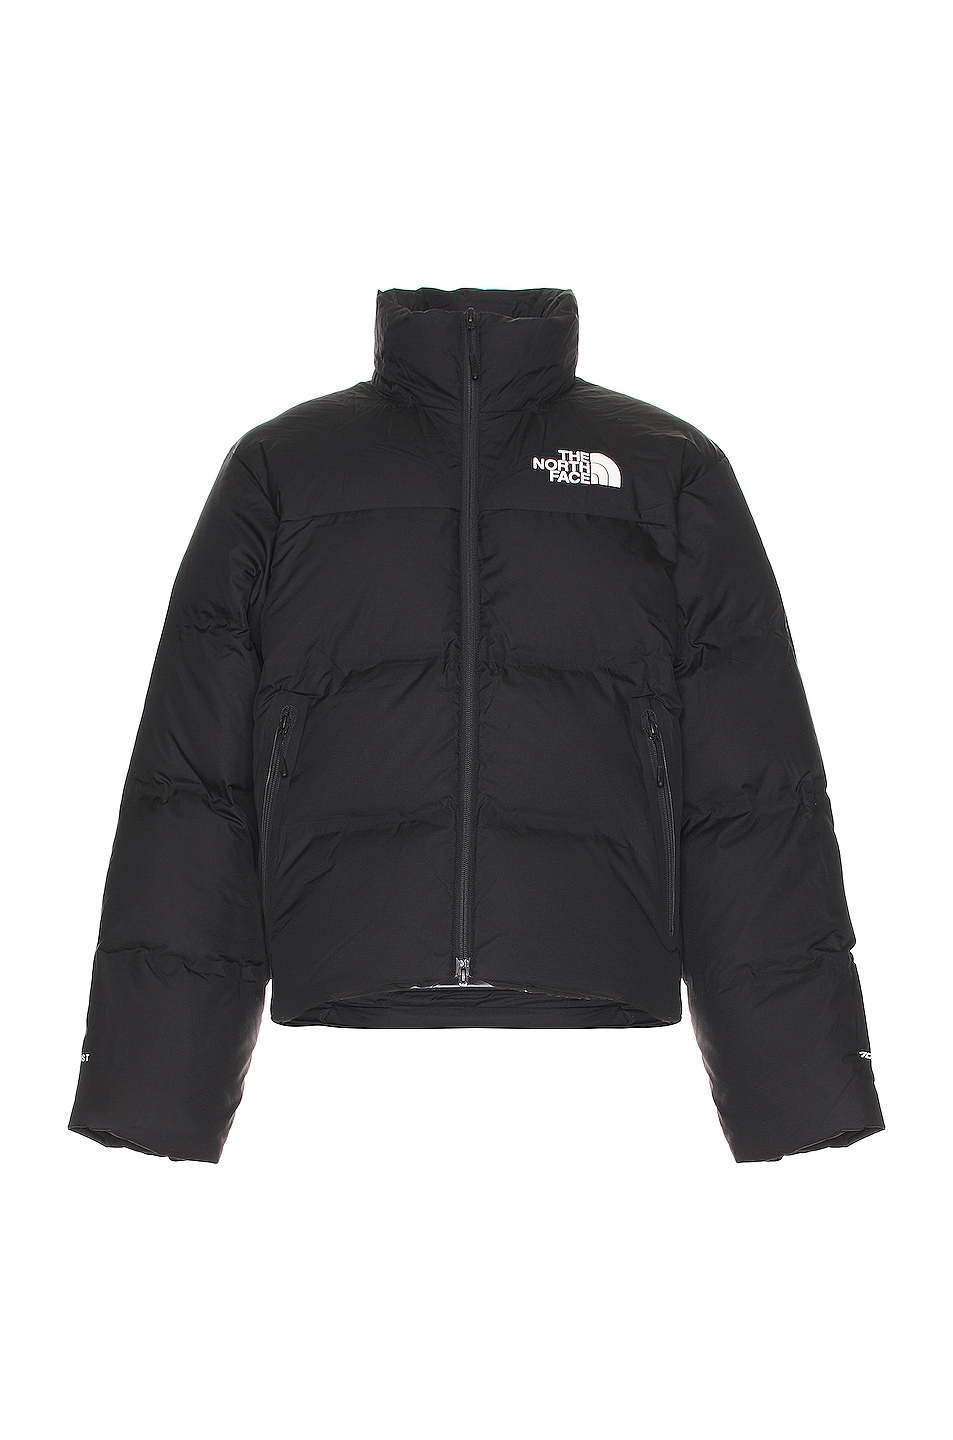 The North Face Rmst Nuptse Jacket in Tnf Black | FWRD